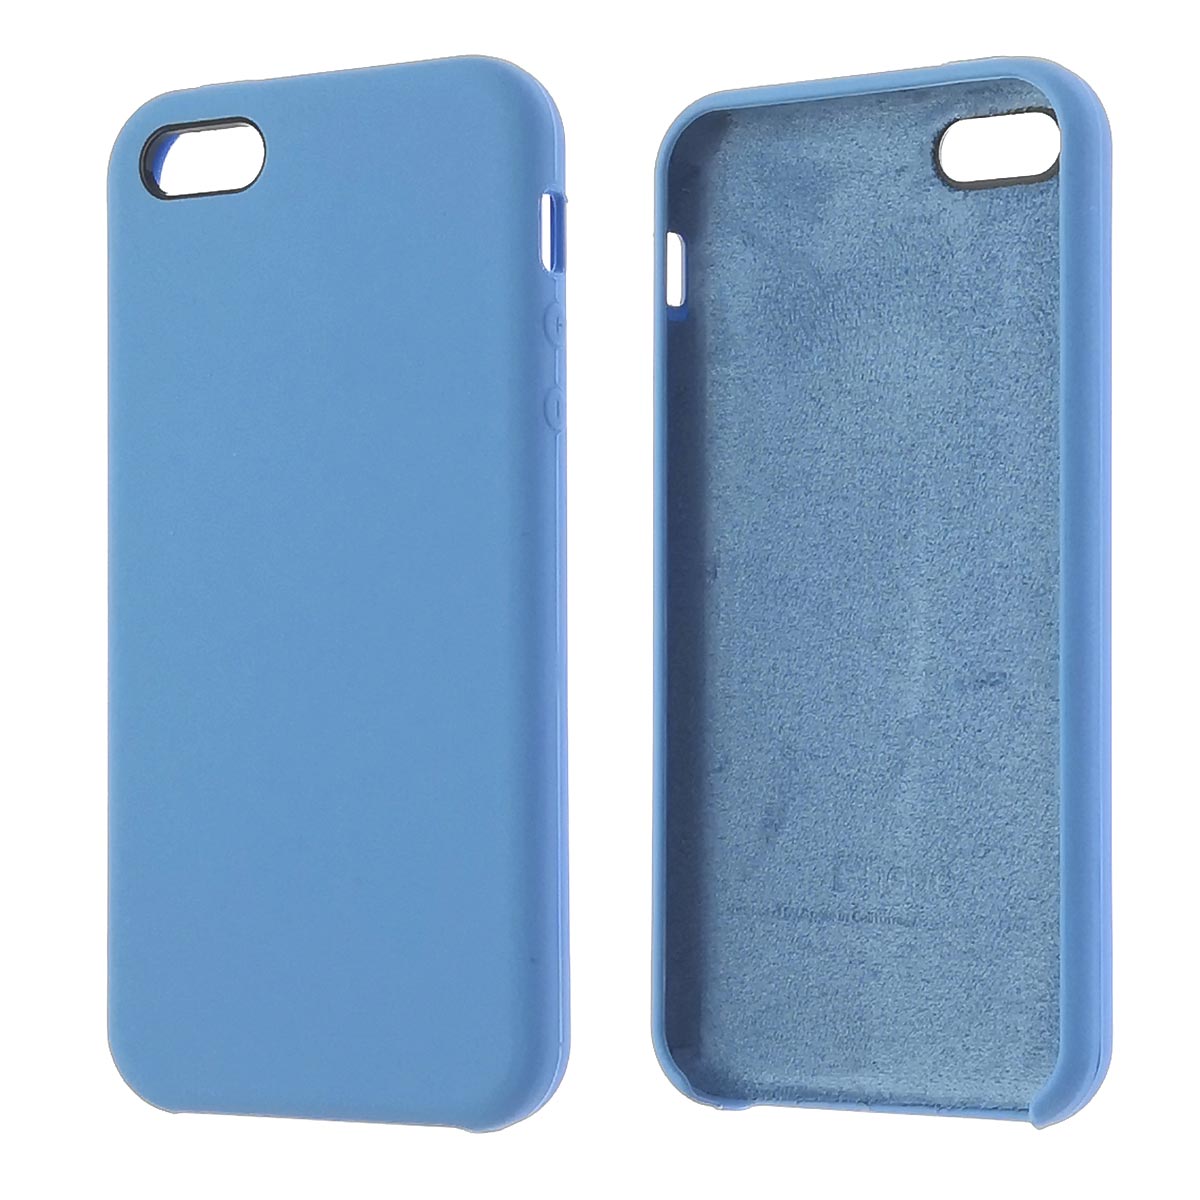 Чехол накладка Silicon Case для APPLE iPhone 5, 5S, SE, силикон, бархат, цвет васильковый.